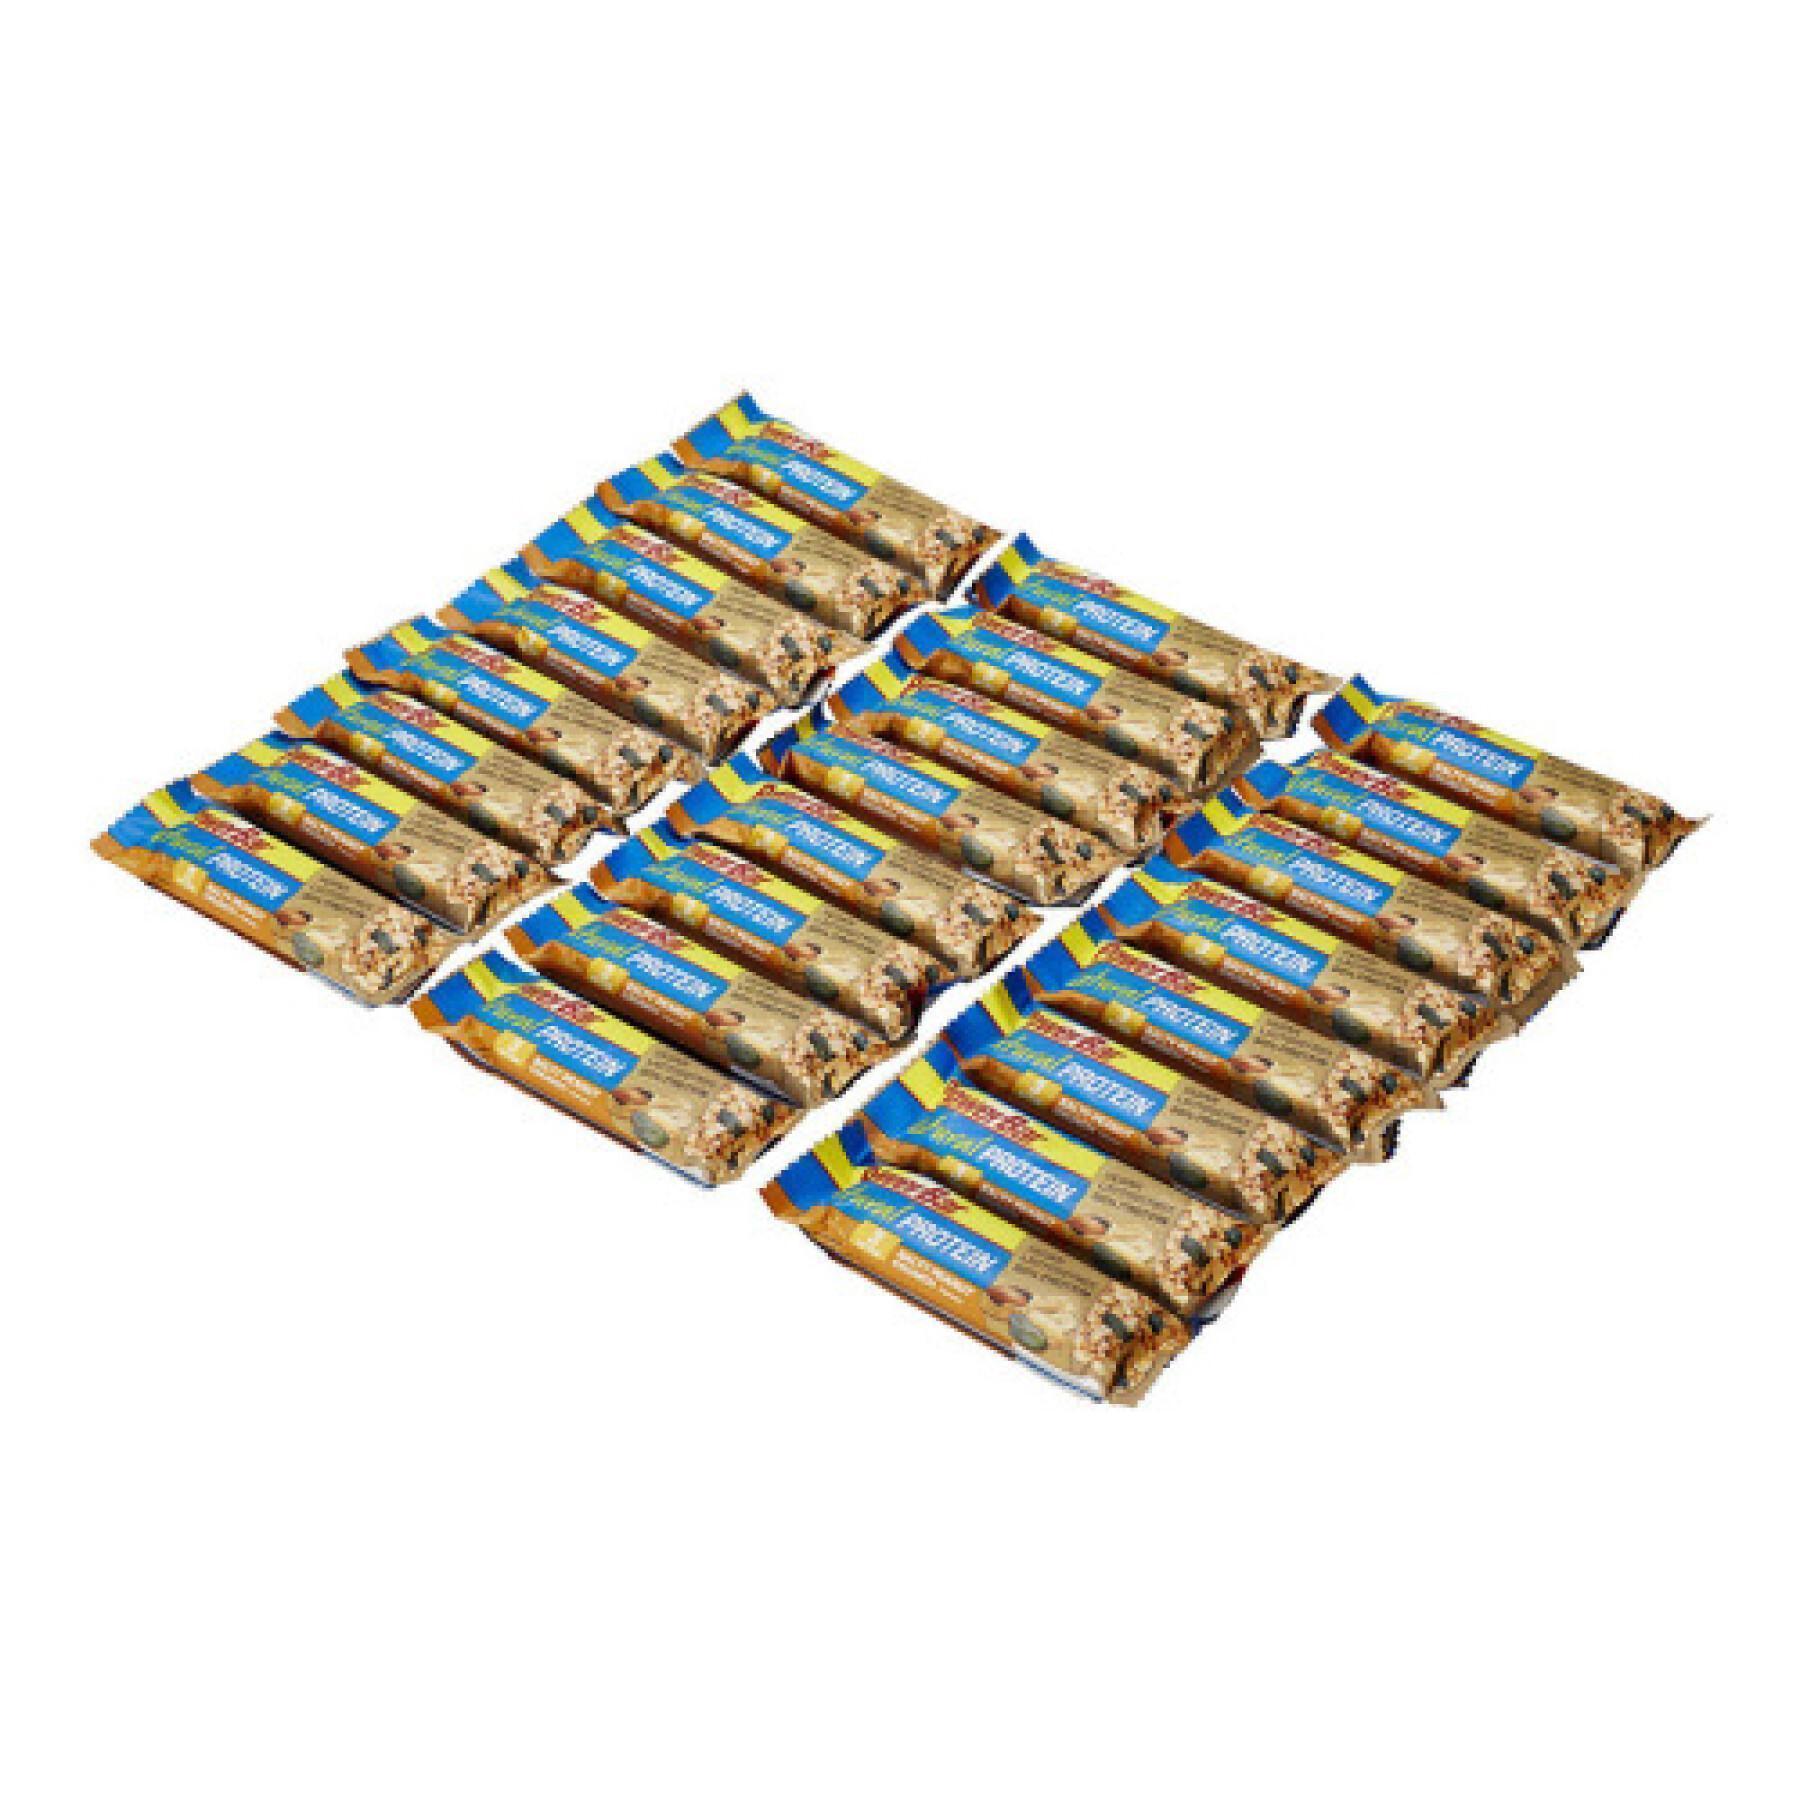 Lot de 24 barres PowerBar Natural Protein Vegan - Salty Peanut Crunch